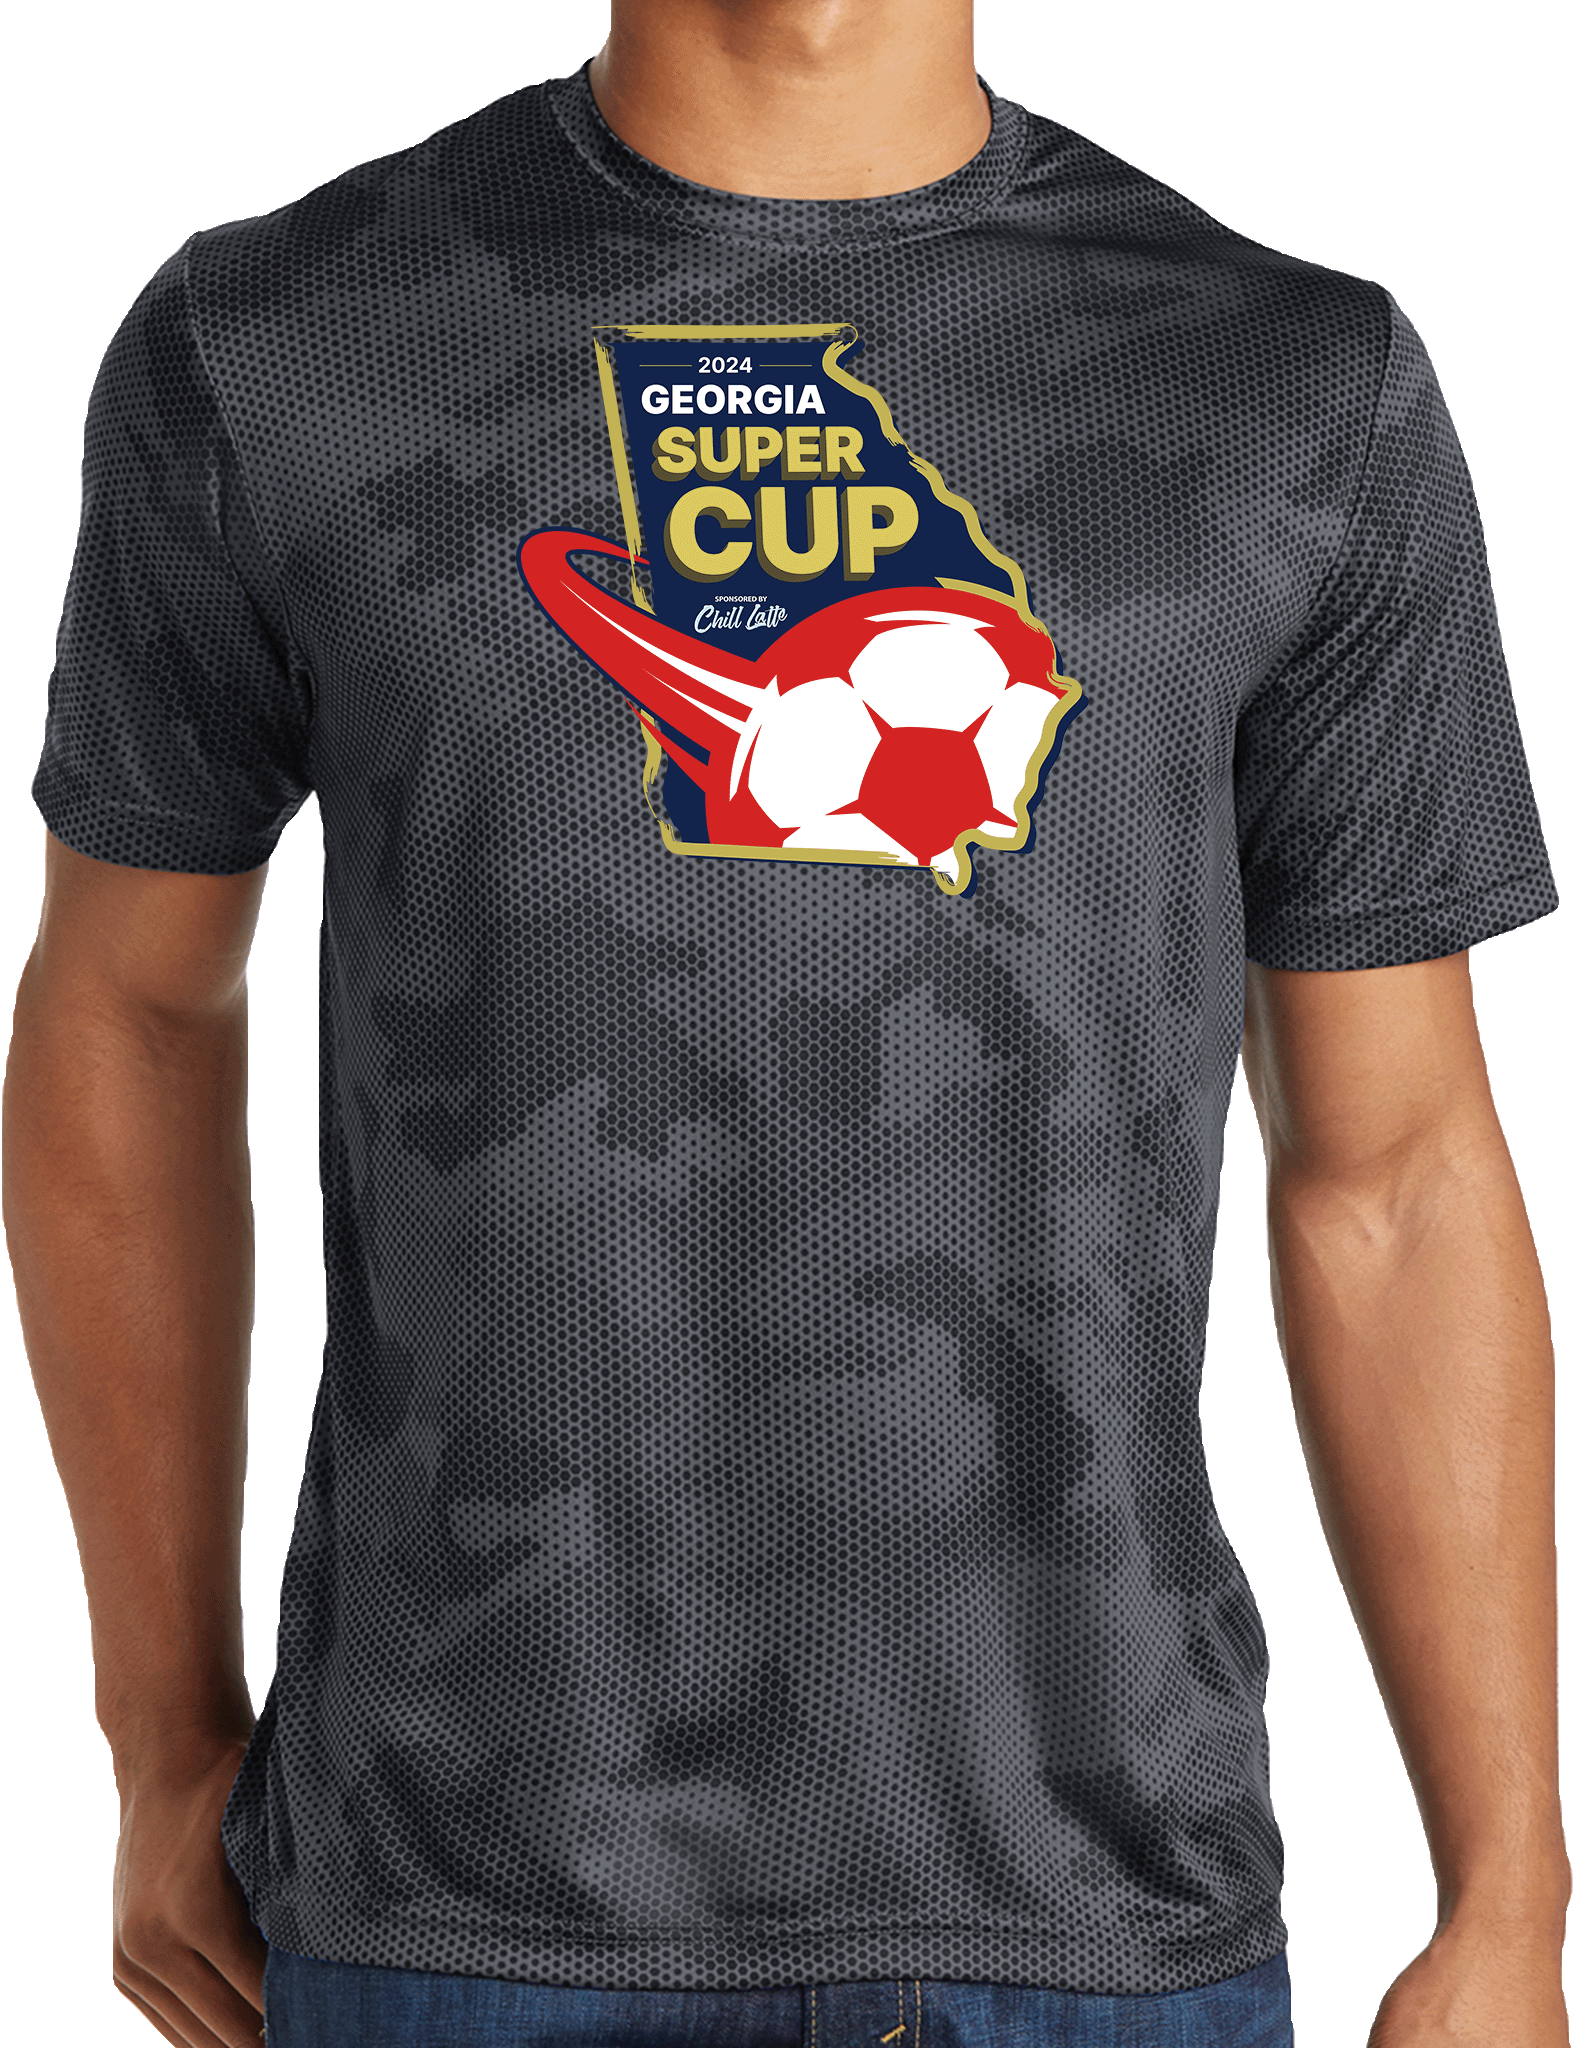 Performance Shirts - 2024 Georgia Super Cup